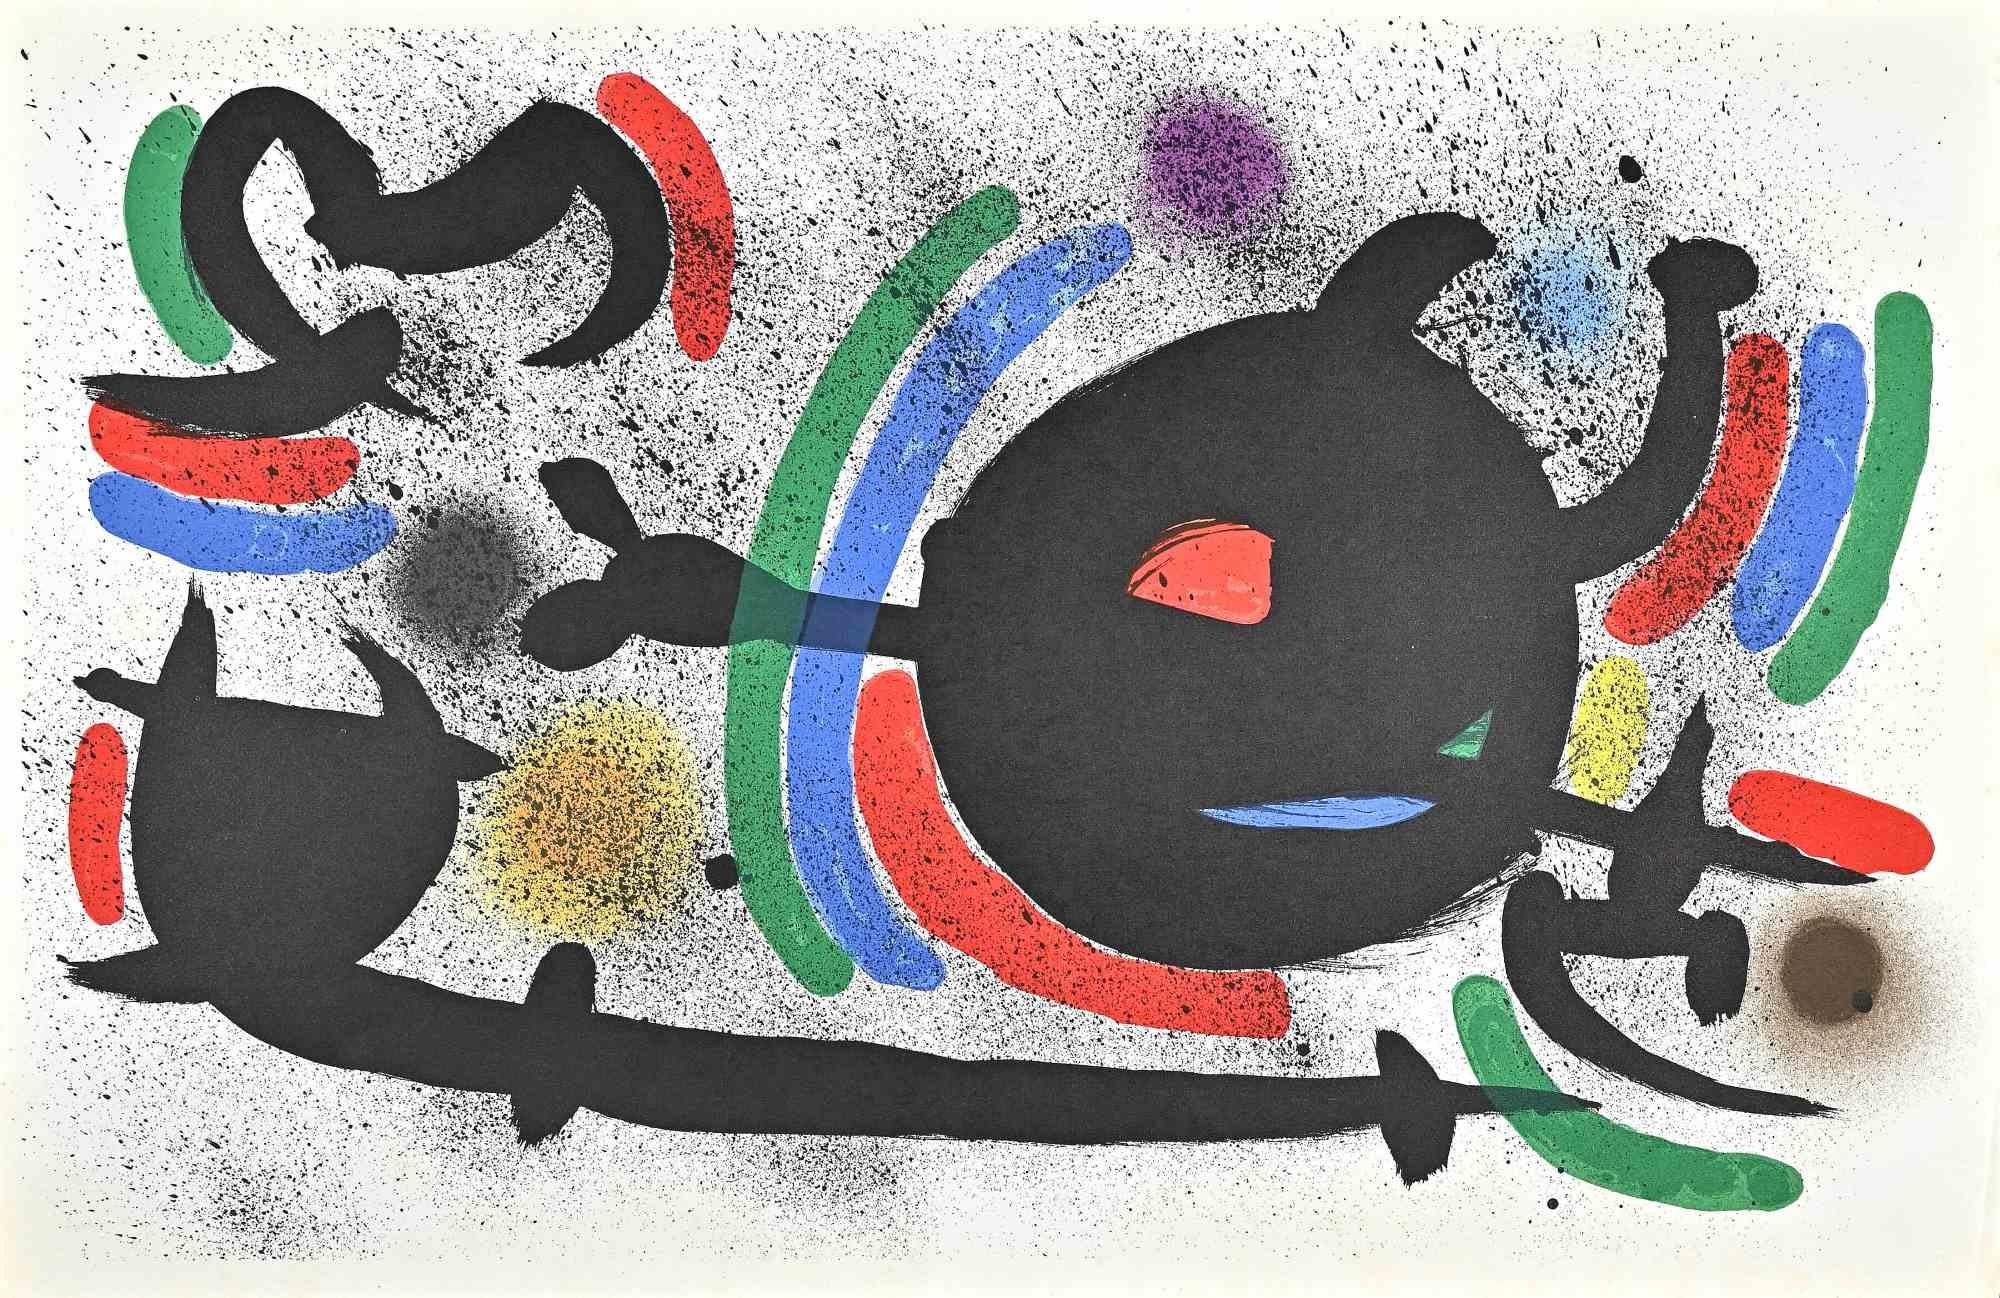 Miró Lithographe I - Plate X - Lithograph by Joan Mirò - 1972